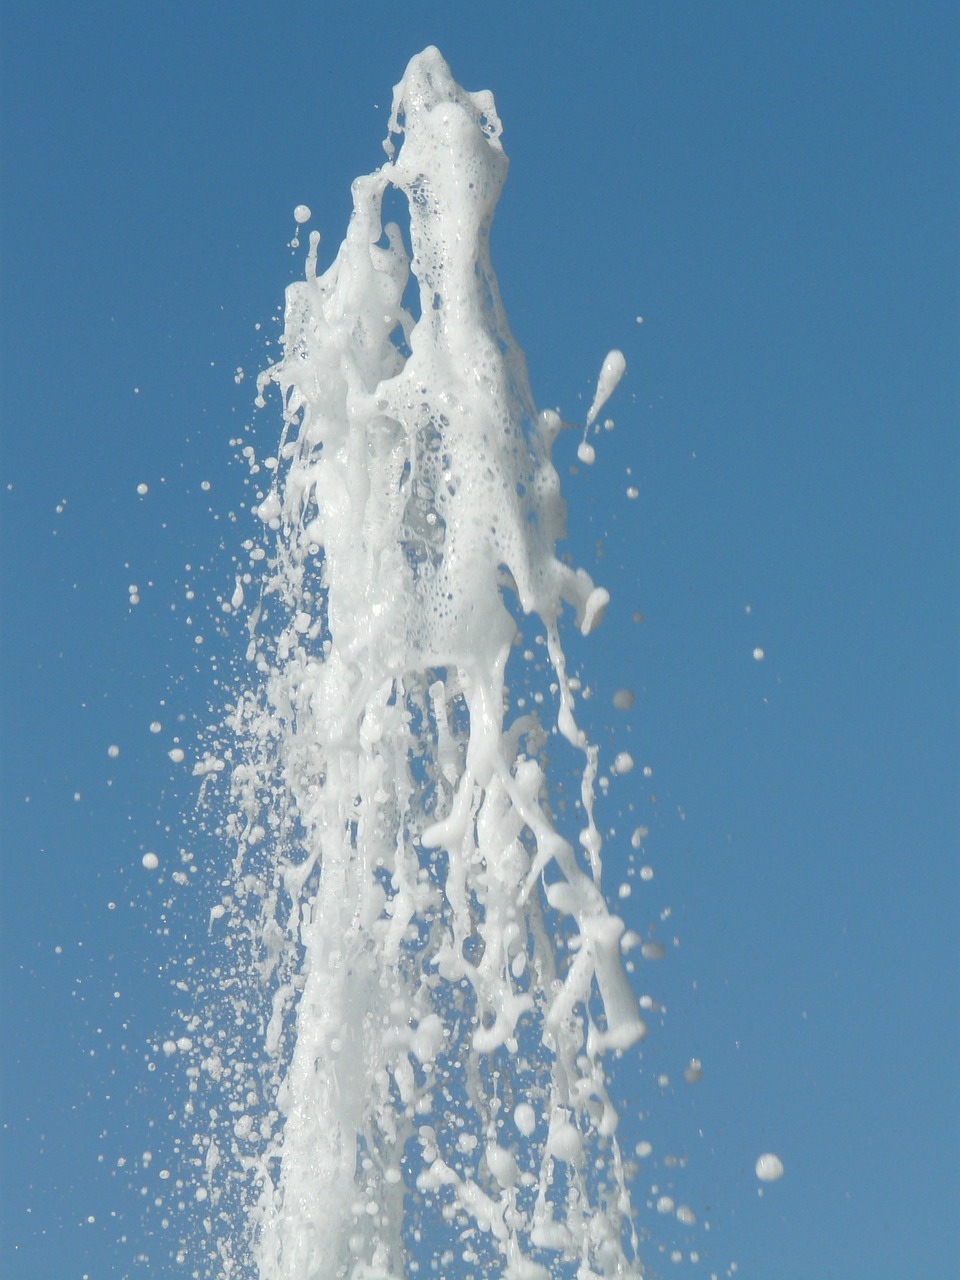 water foam inject free photo